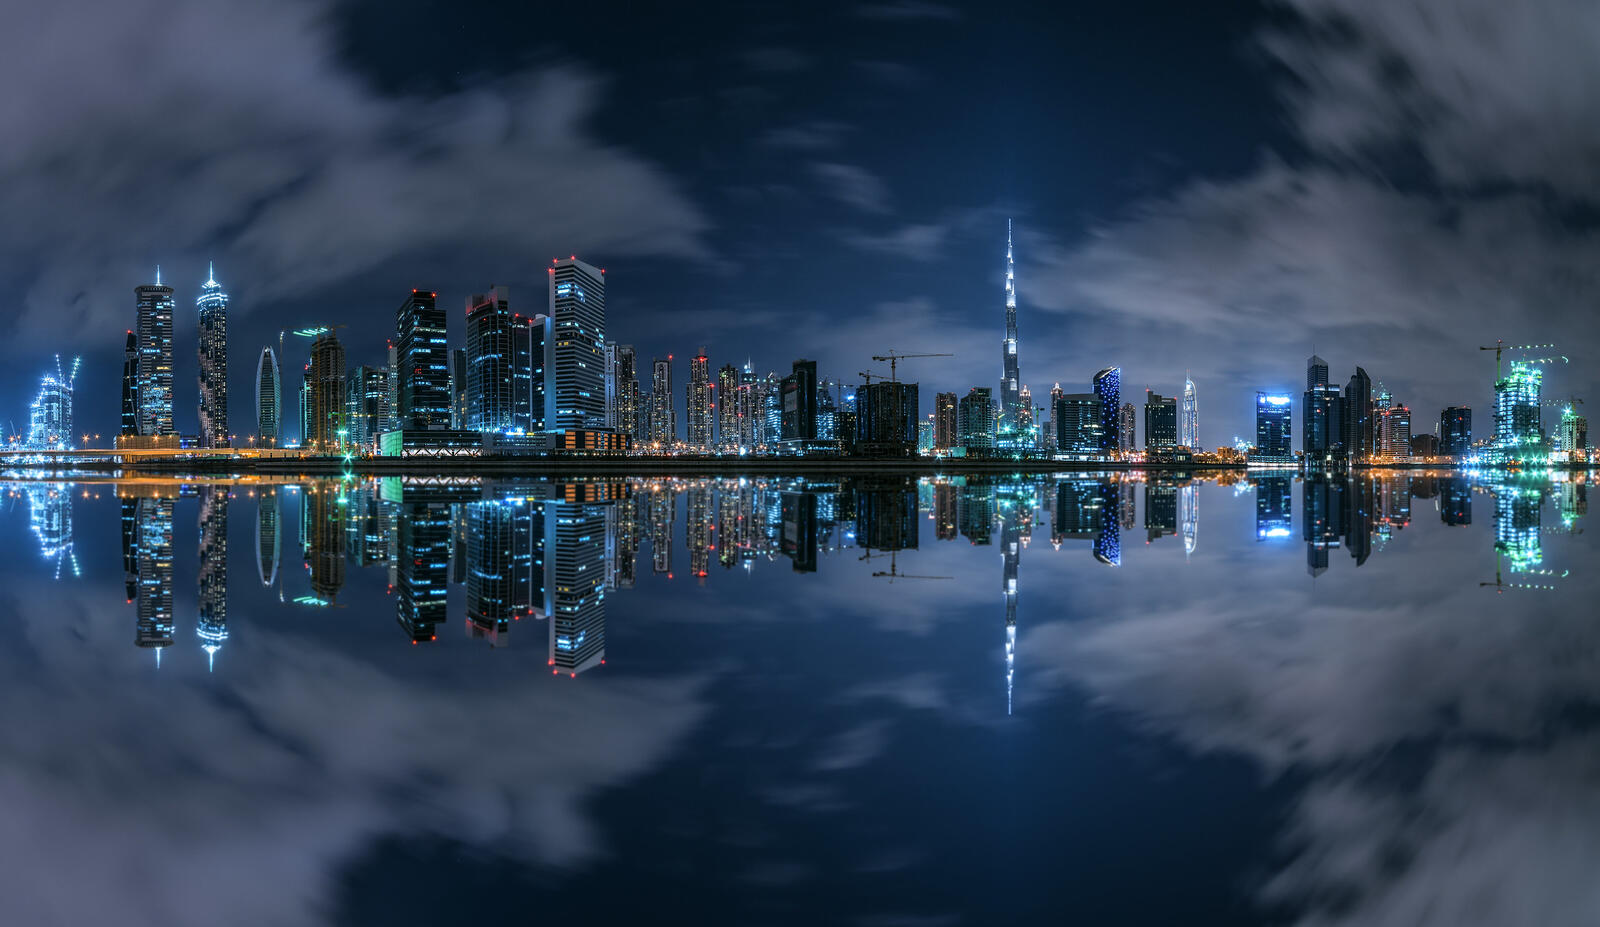 Wallpapers Dubai night city lights on the desktop